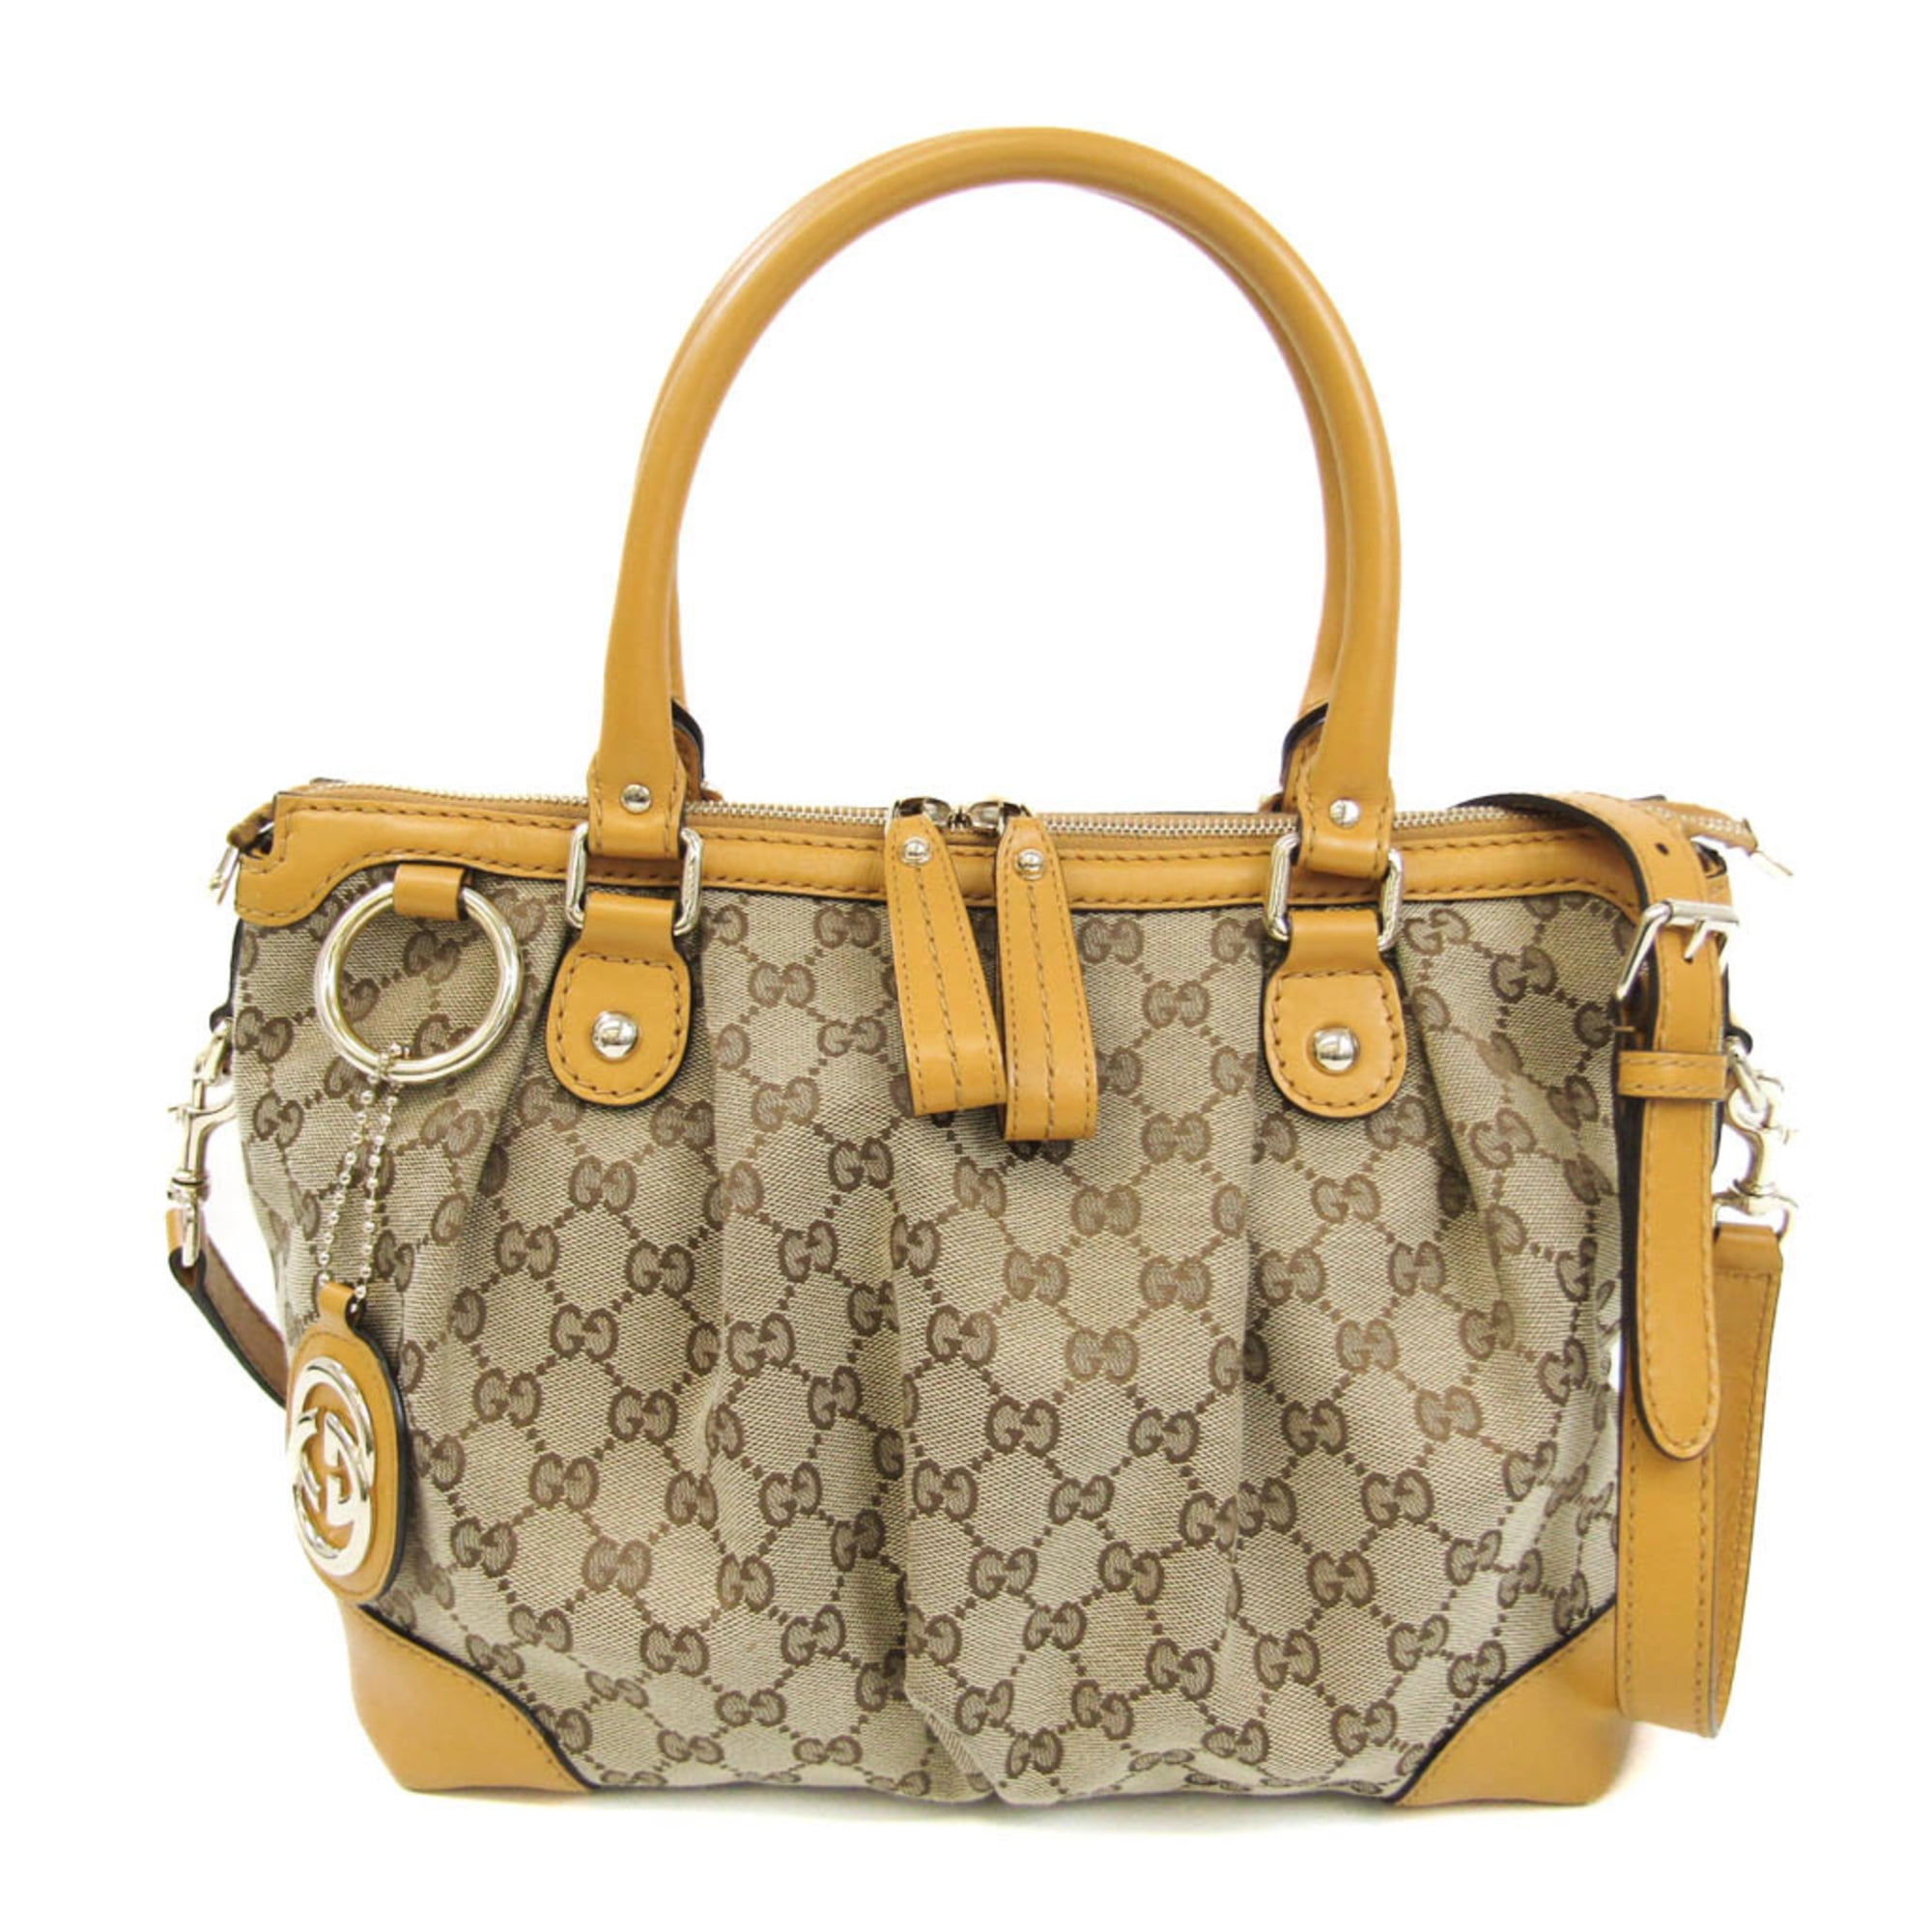 GUCCI Branded Handbags for Ladies, Casual wear | SELL ON TAJJIR BABA